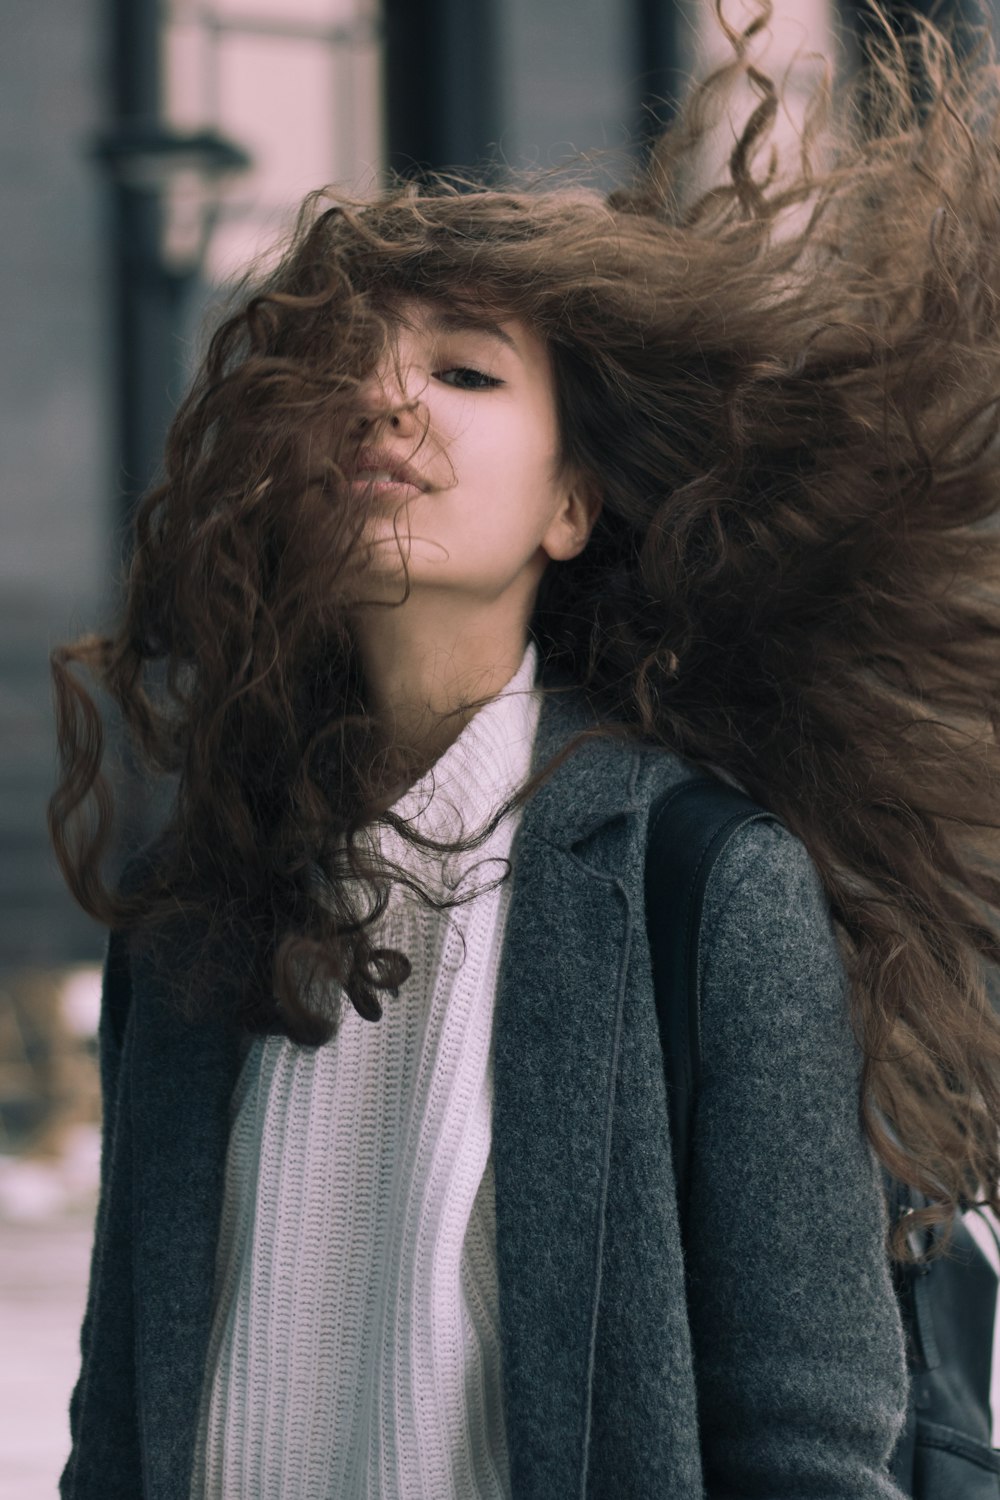 Women's gray coat photo – Free Hair Image on Unsplash